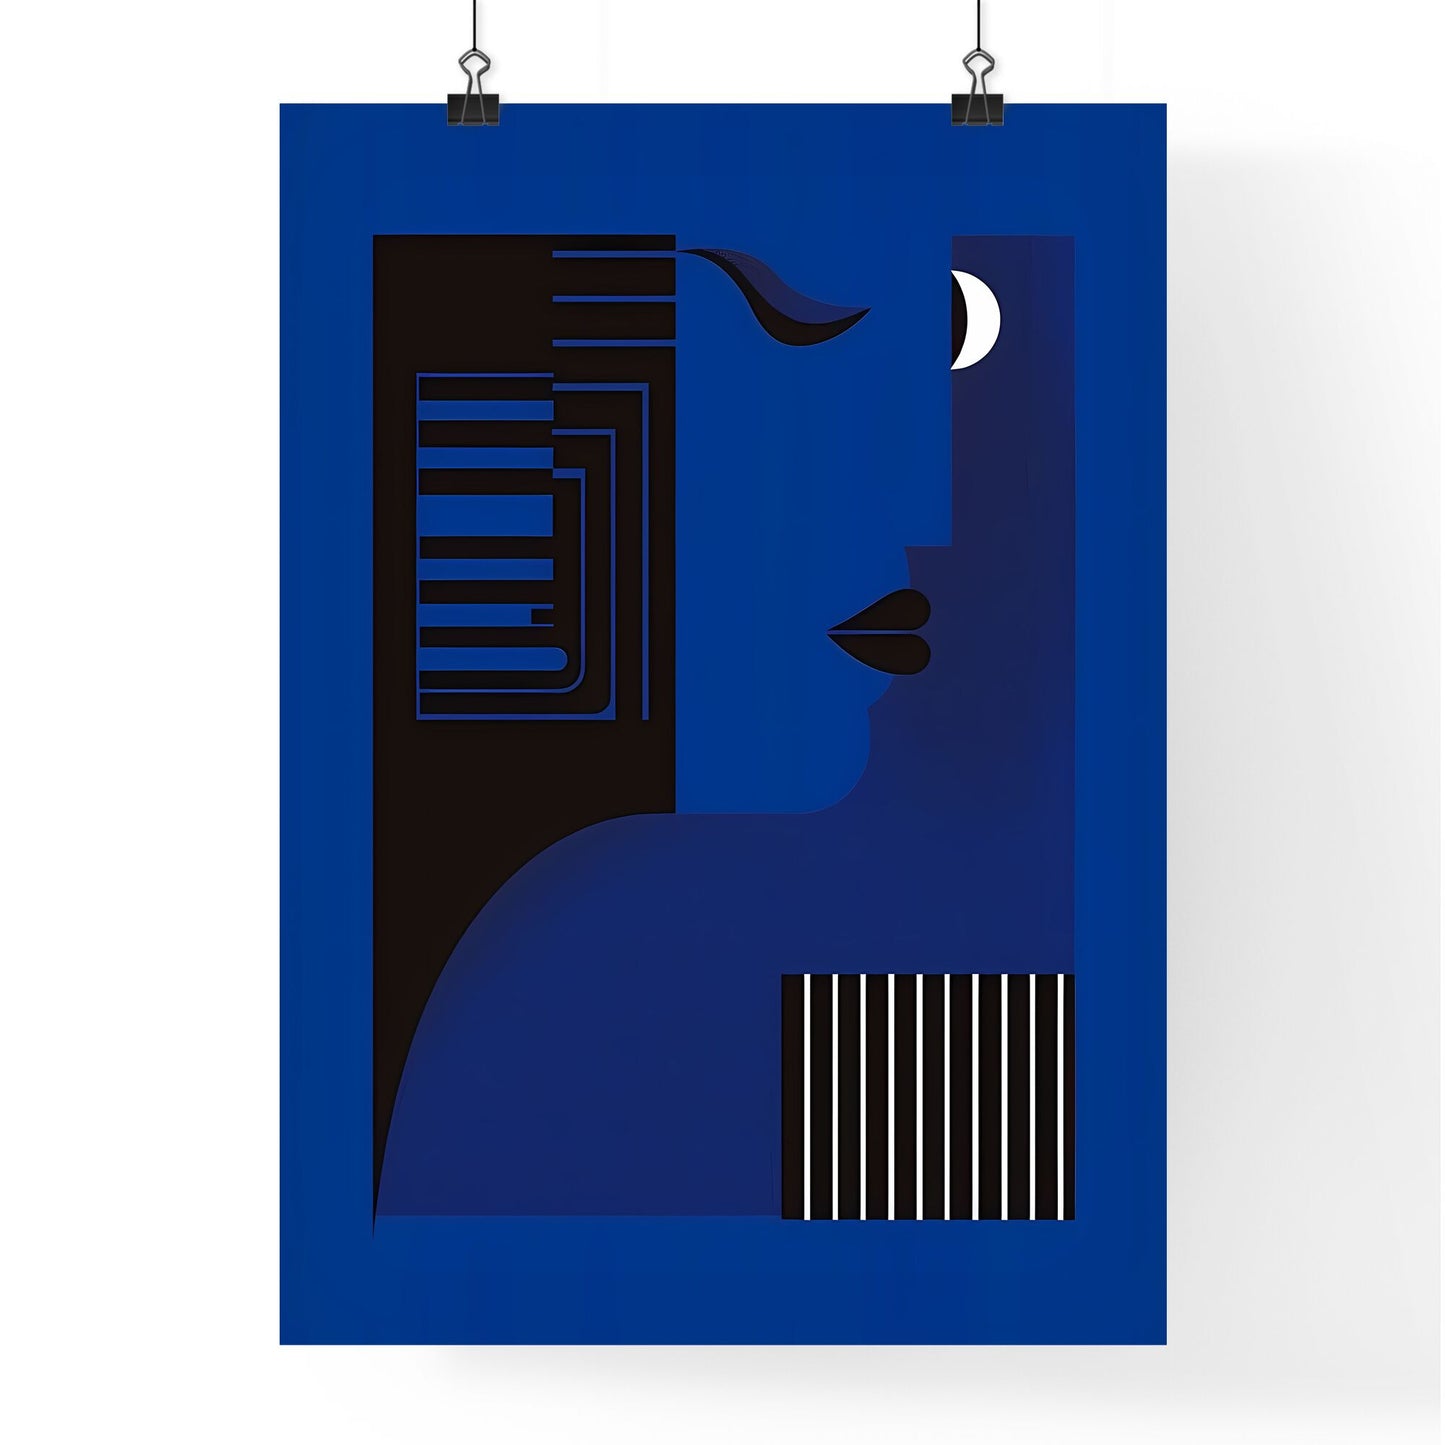 Modern Geometric Bauhaus Style Art Piece with Vibrant Blue and Black Shapes Default Title